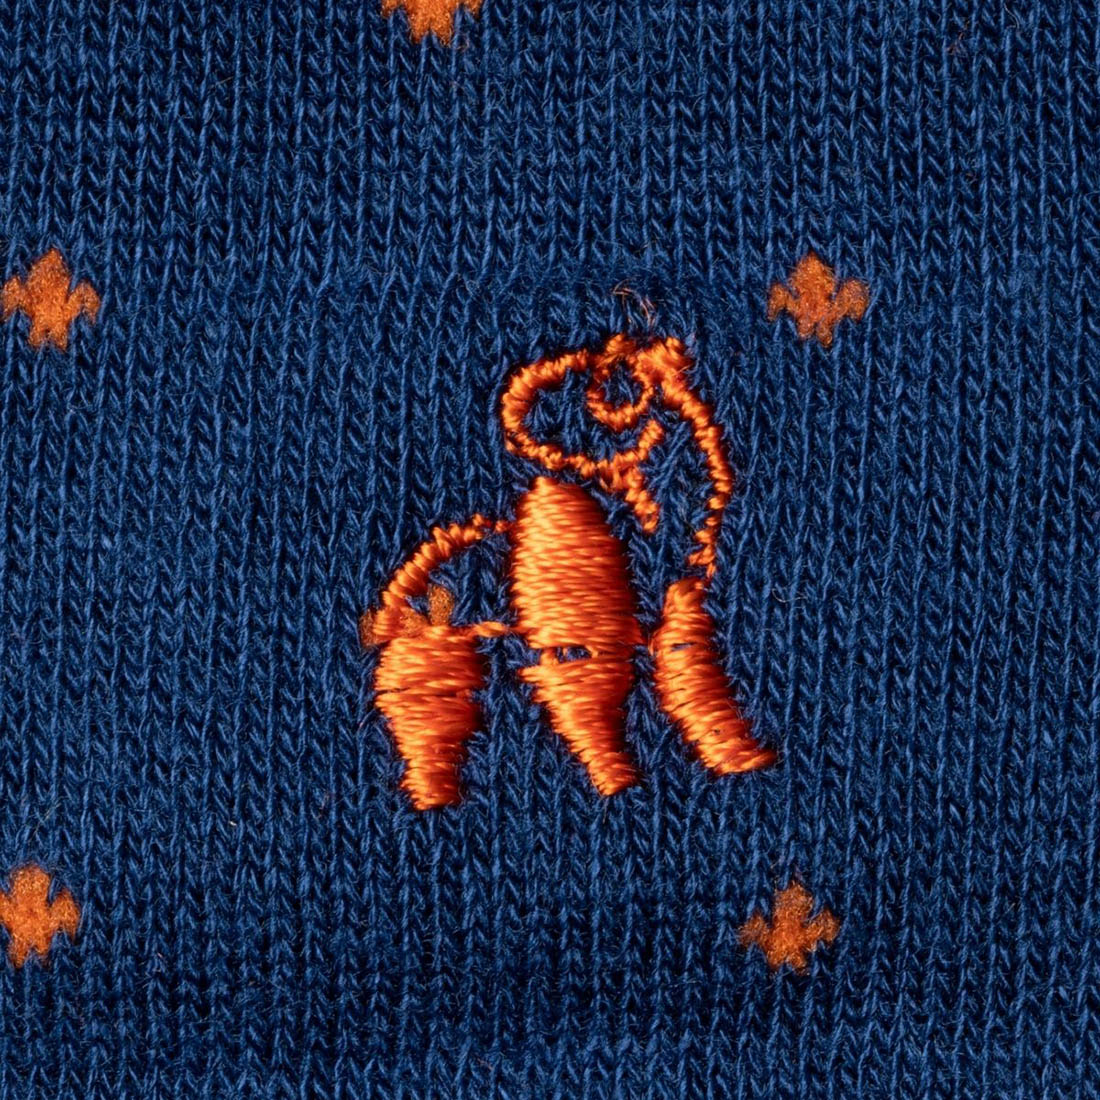 Orange and Blue Sock Bundle - Four Pairs